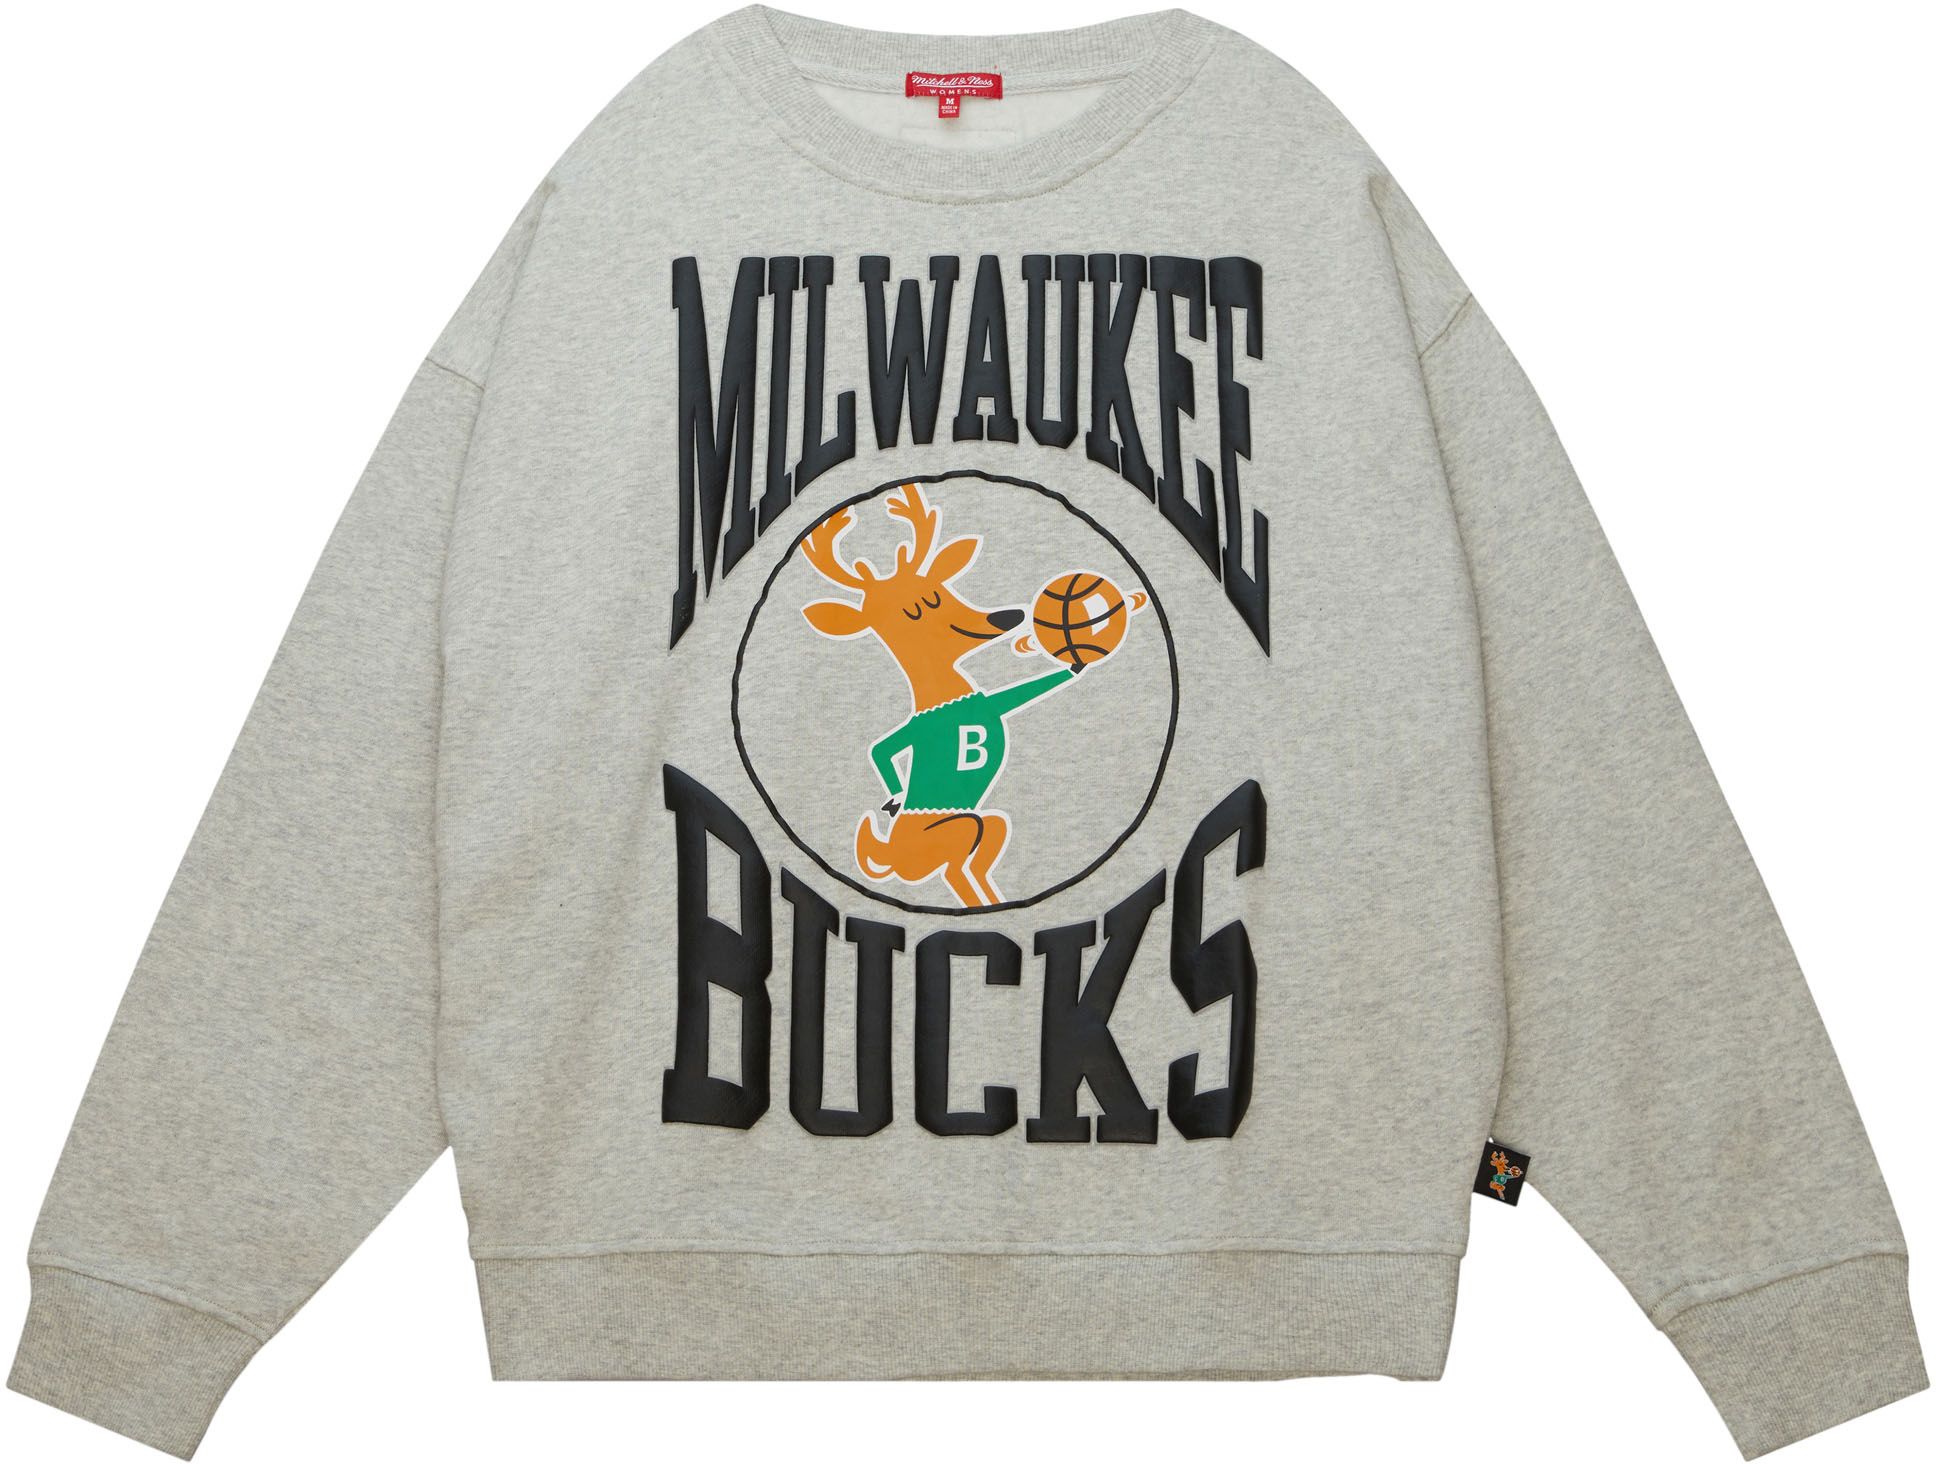 Milwaukee Bucks Kids' Apparel  Curbside Pickup Available at DICK'S